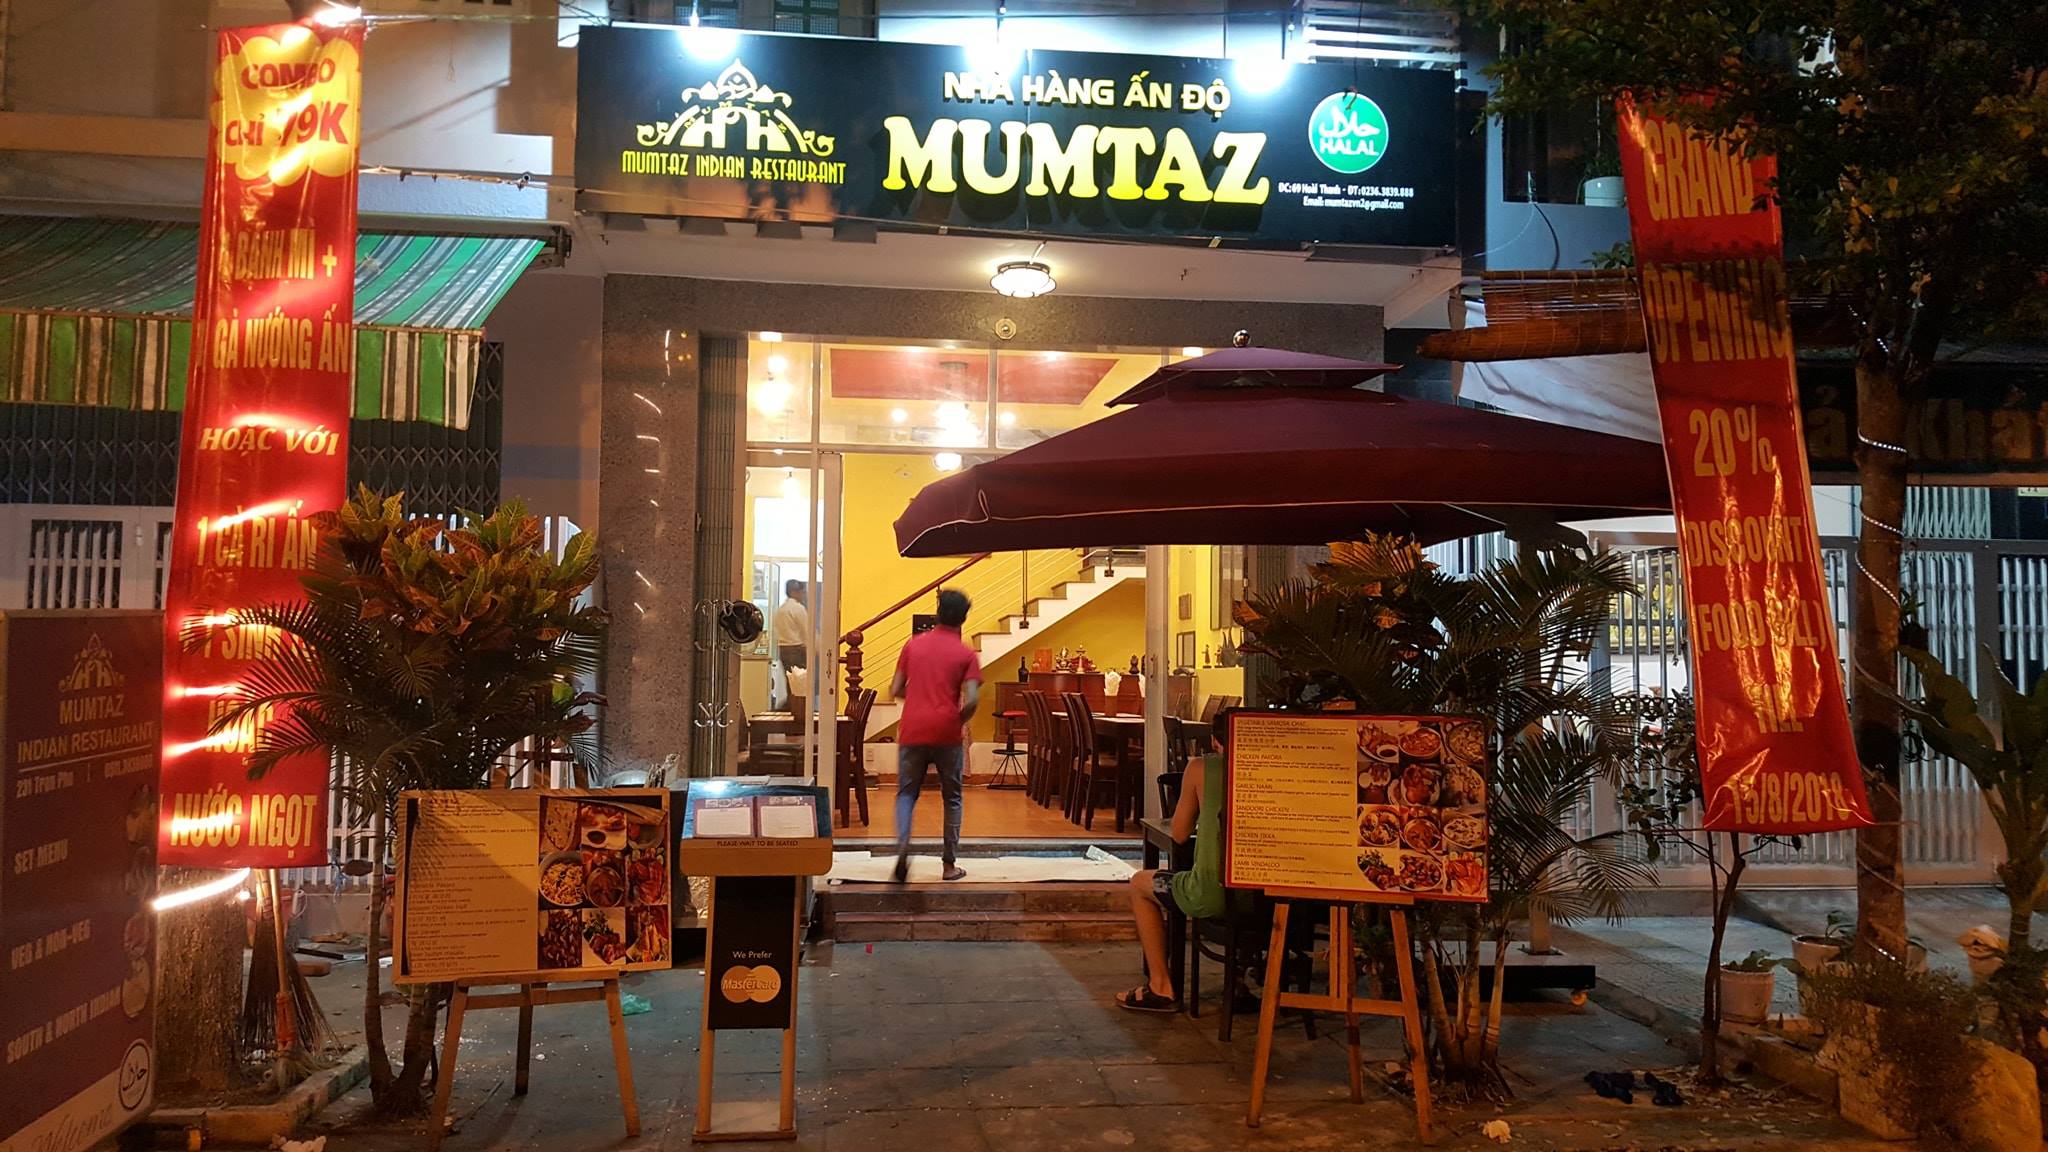 Mumtaz Indian Restaurant is one of best Italian restaurants in Da Nang